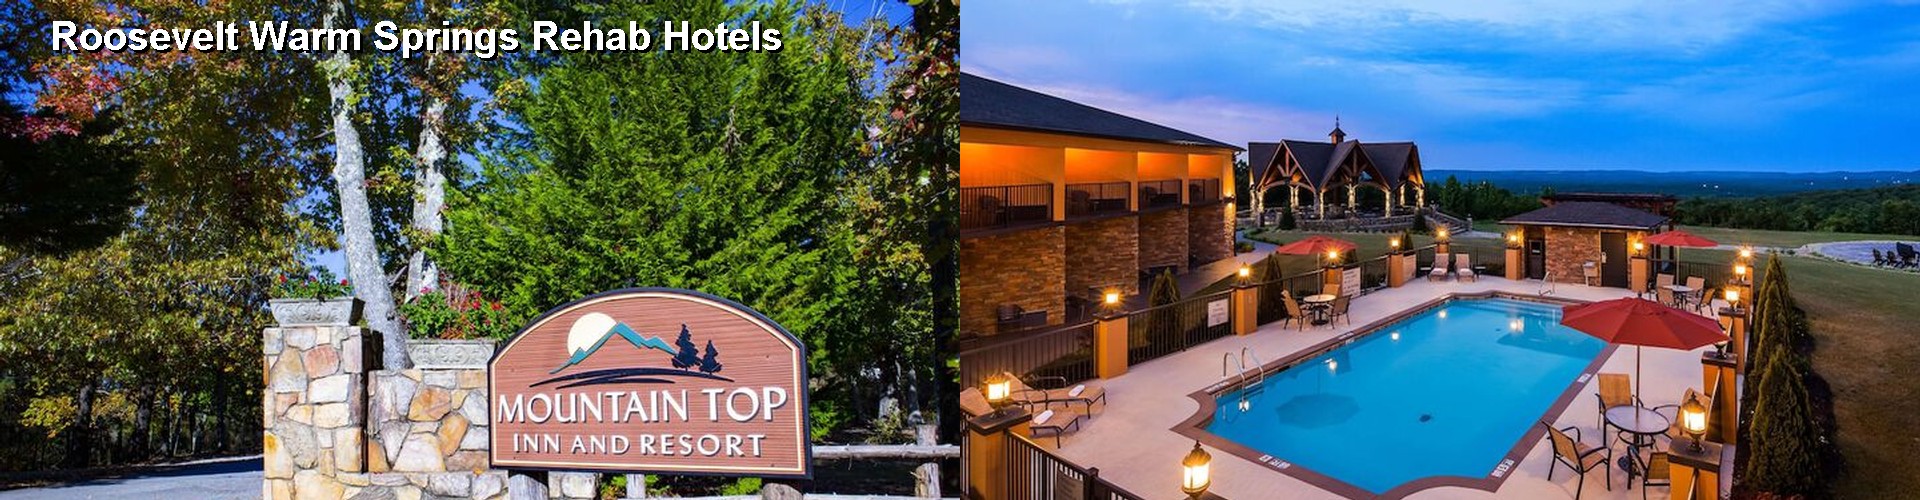 5 Best Hotels near Roosevelt Warm Springs Rehab